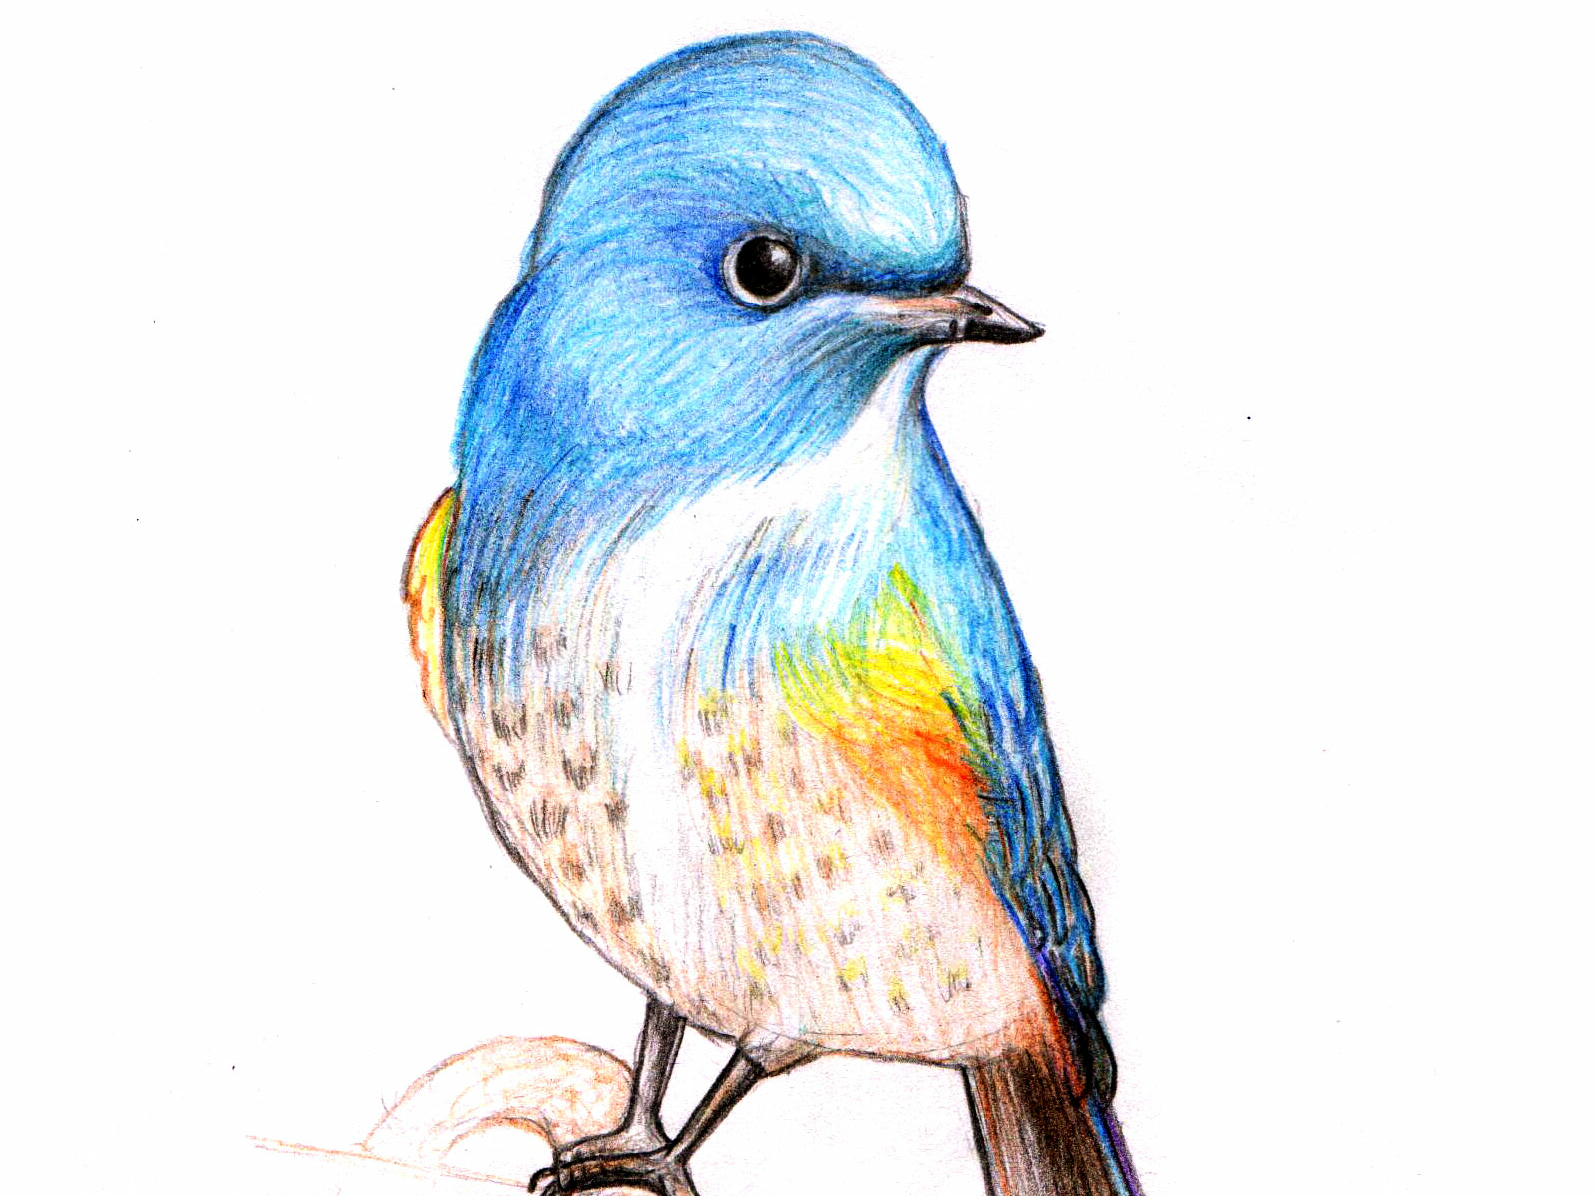 Bird Pencil Art by Yunus on Dribbble